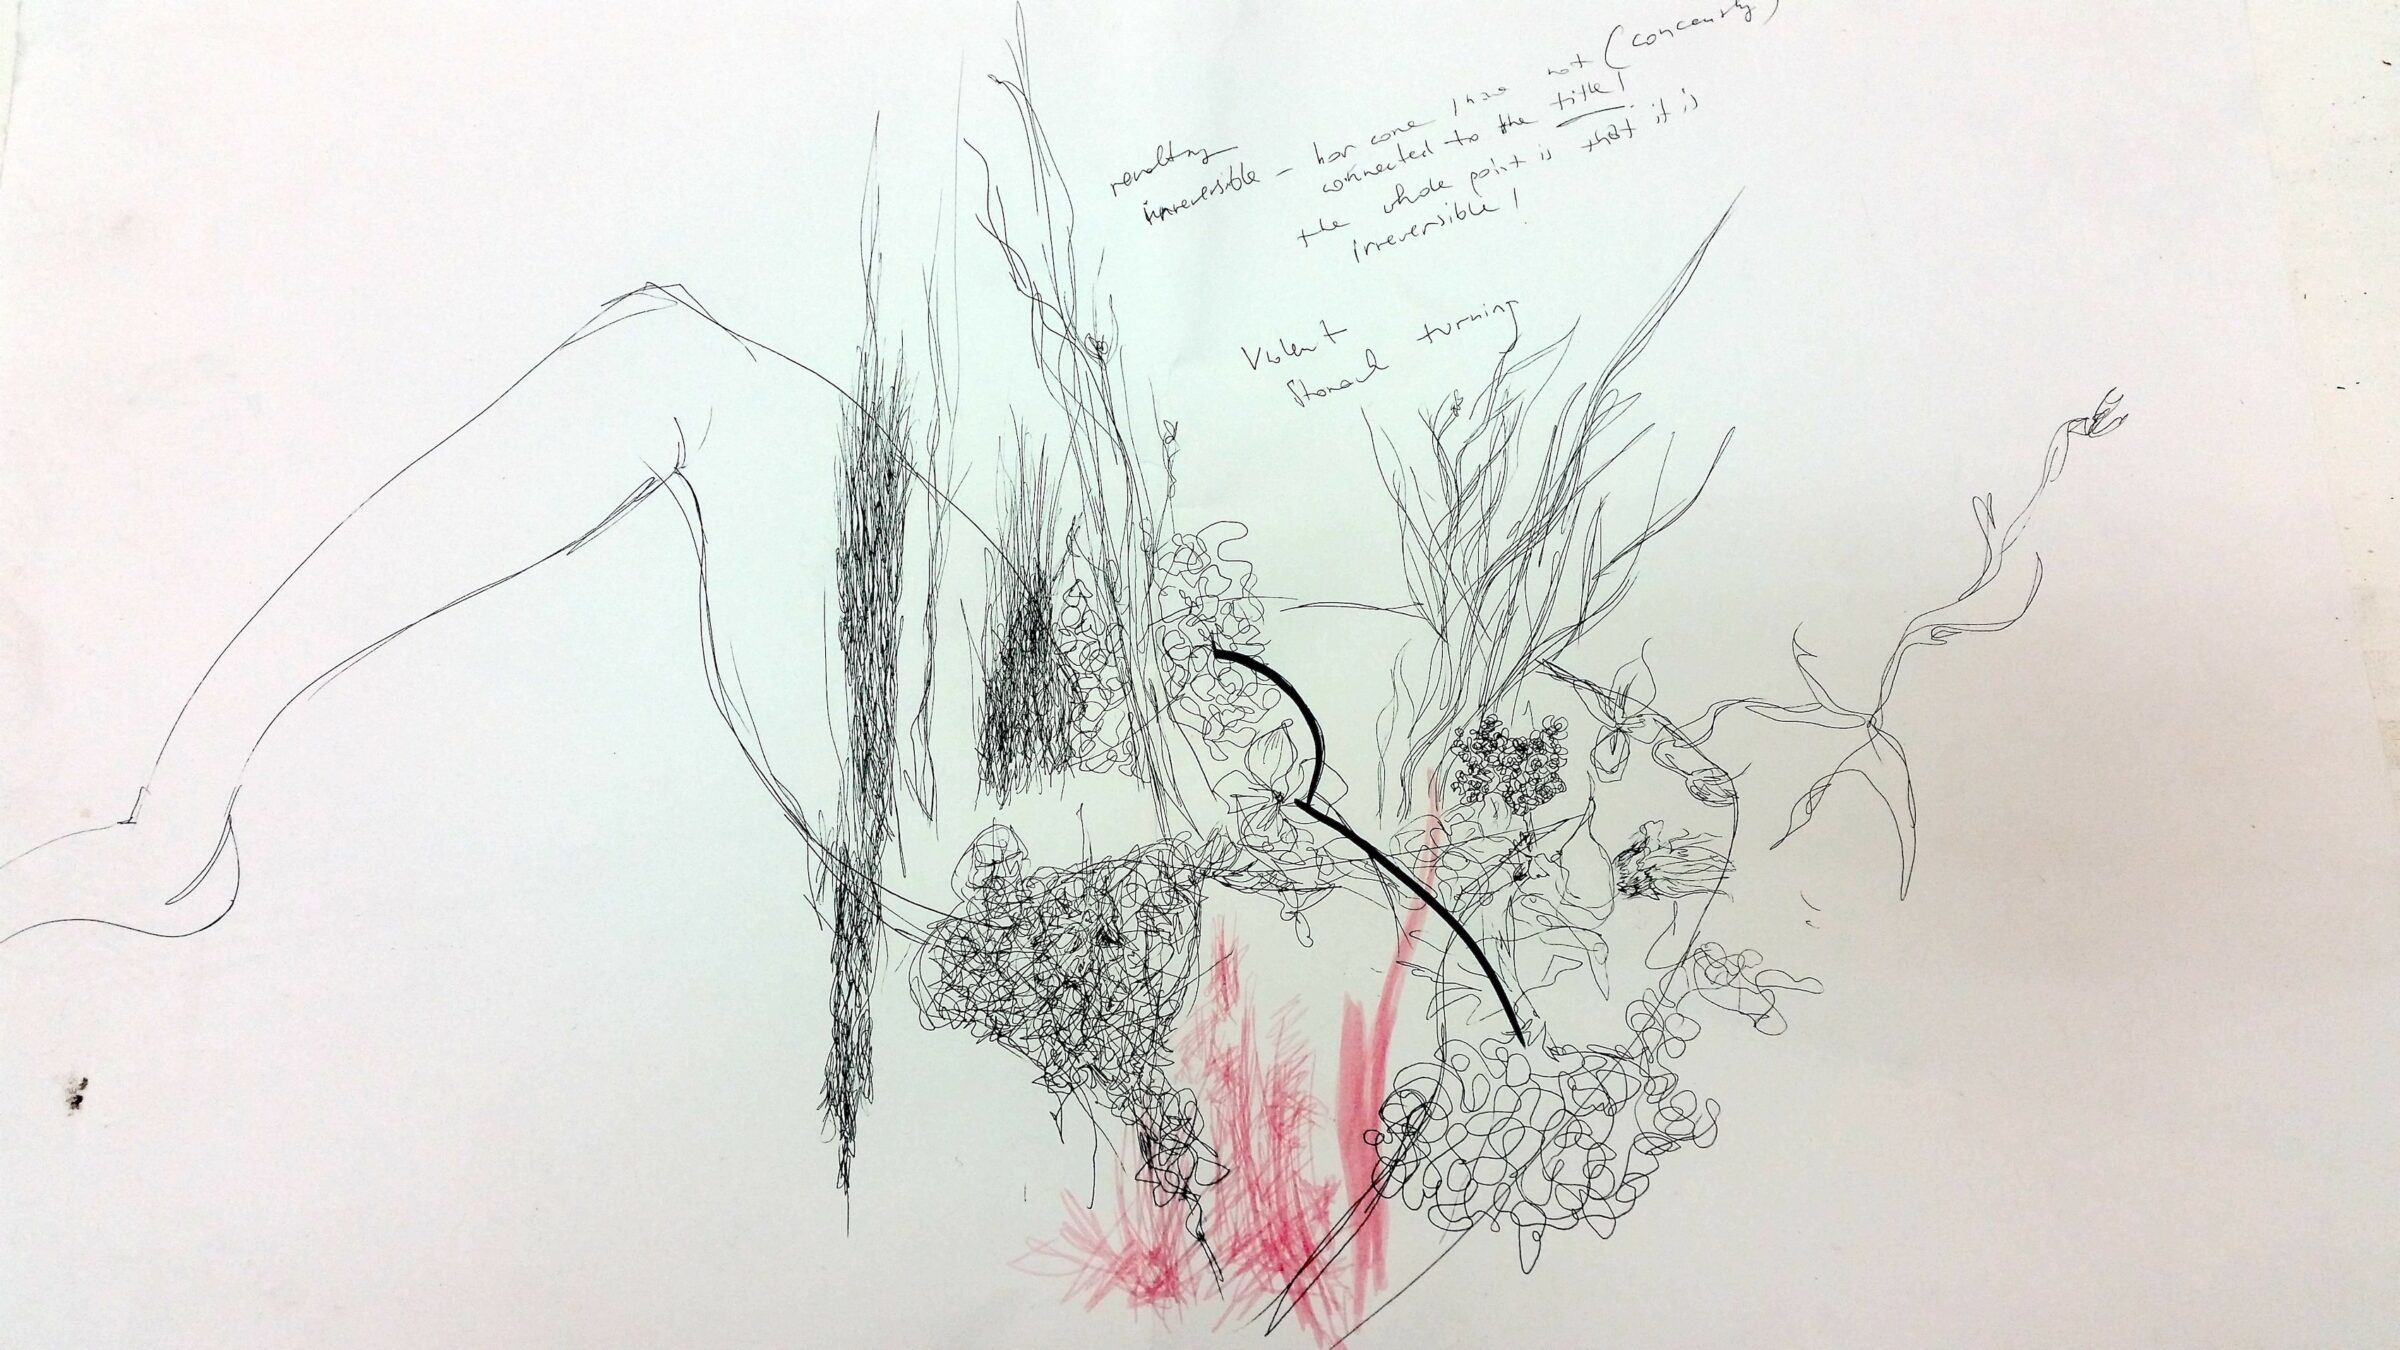 Relating III, 59 x 84cm, felt pen, marker, biro on paper, 2014.